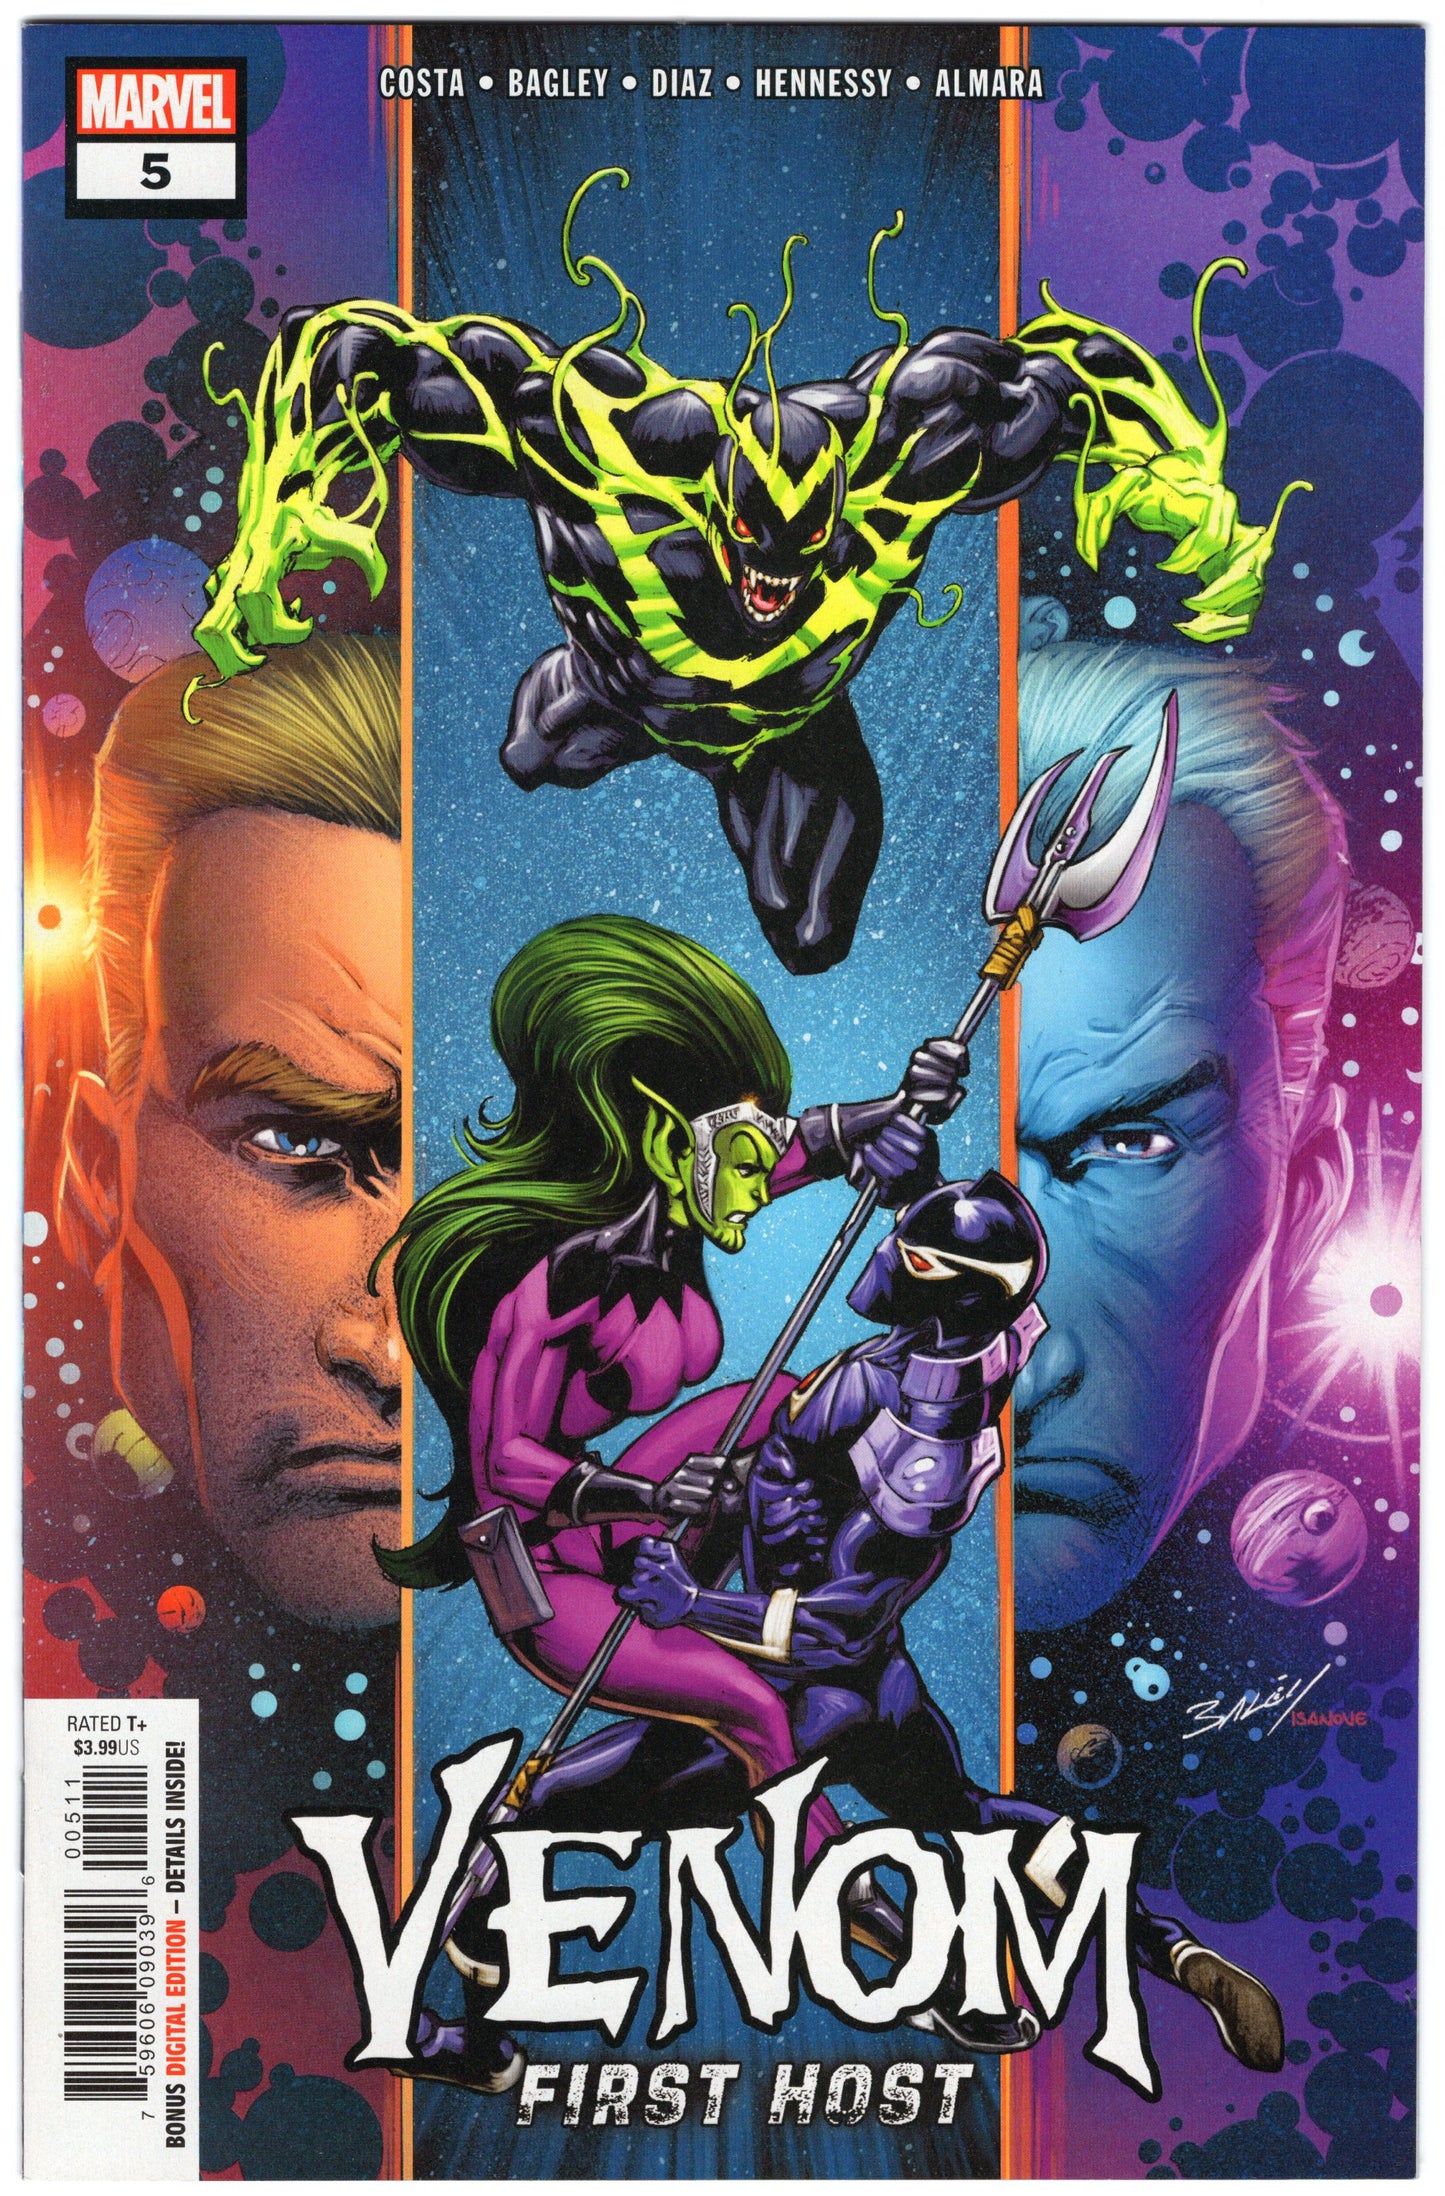 Venom First Host - Issue #5 (Nov. 2018 - Marvel Comics) NM